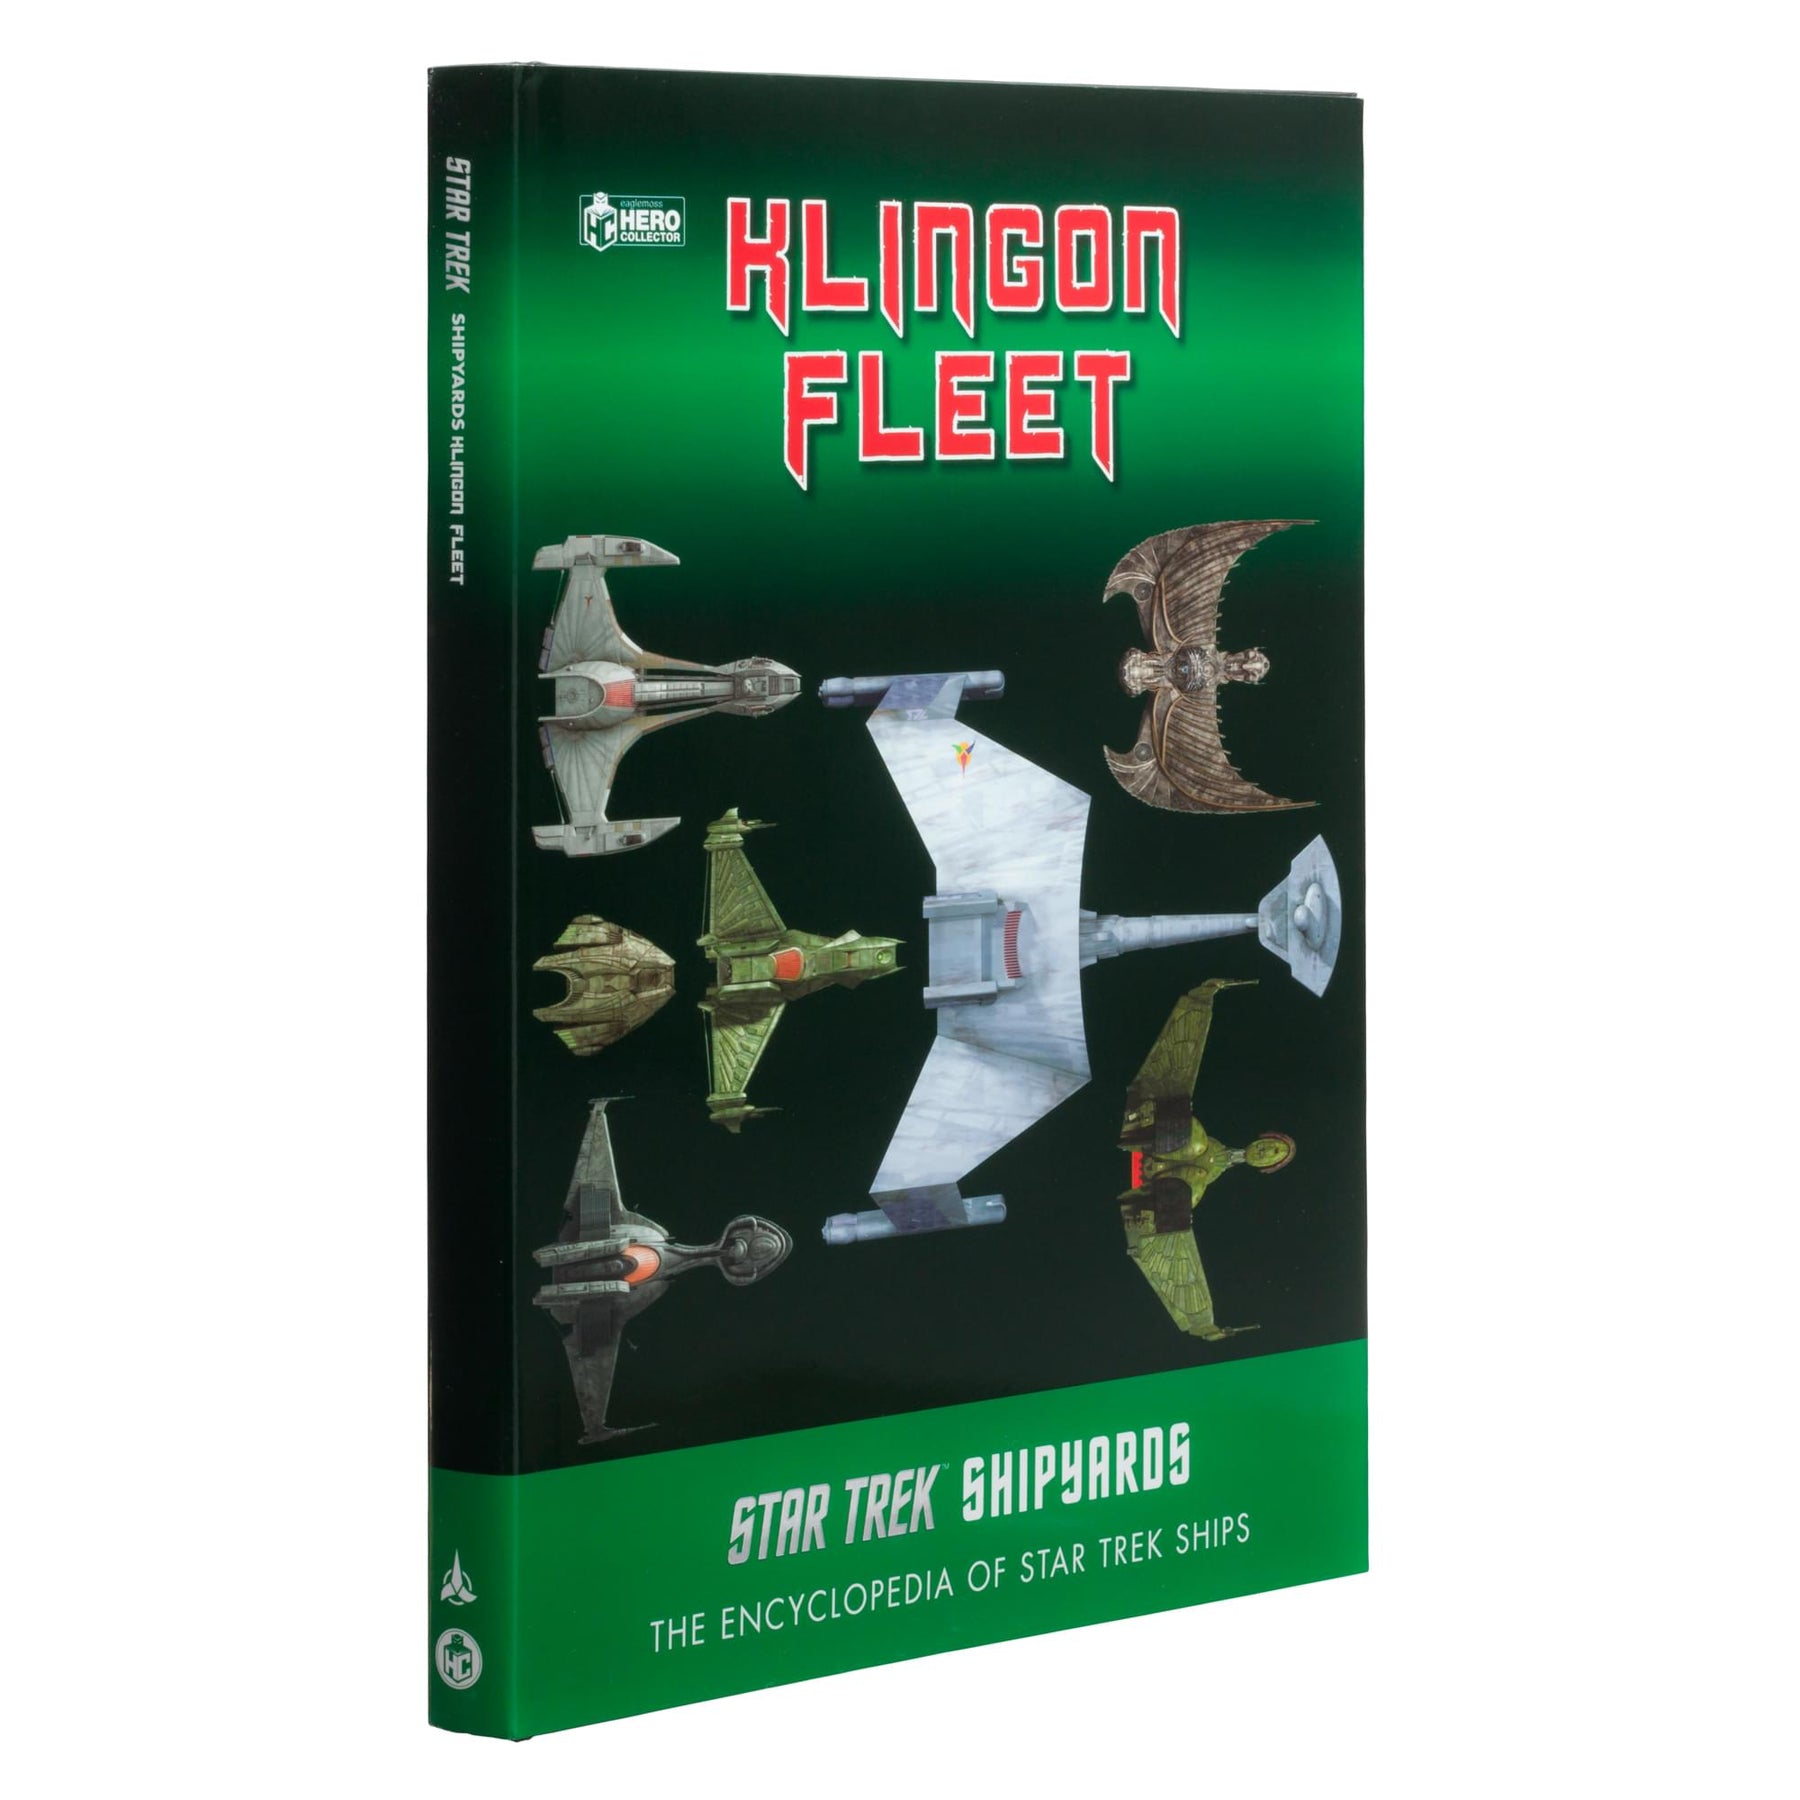 Star Trek Shipyards Book | The Klingon Fleet